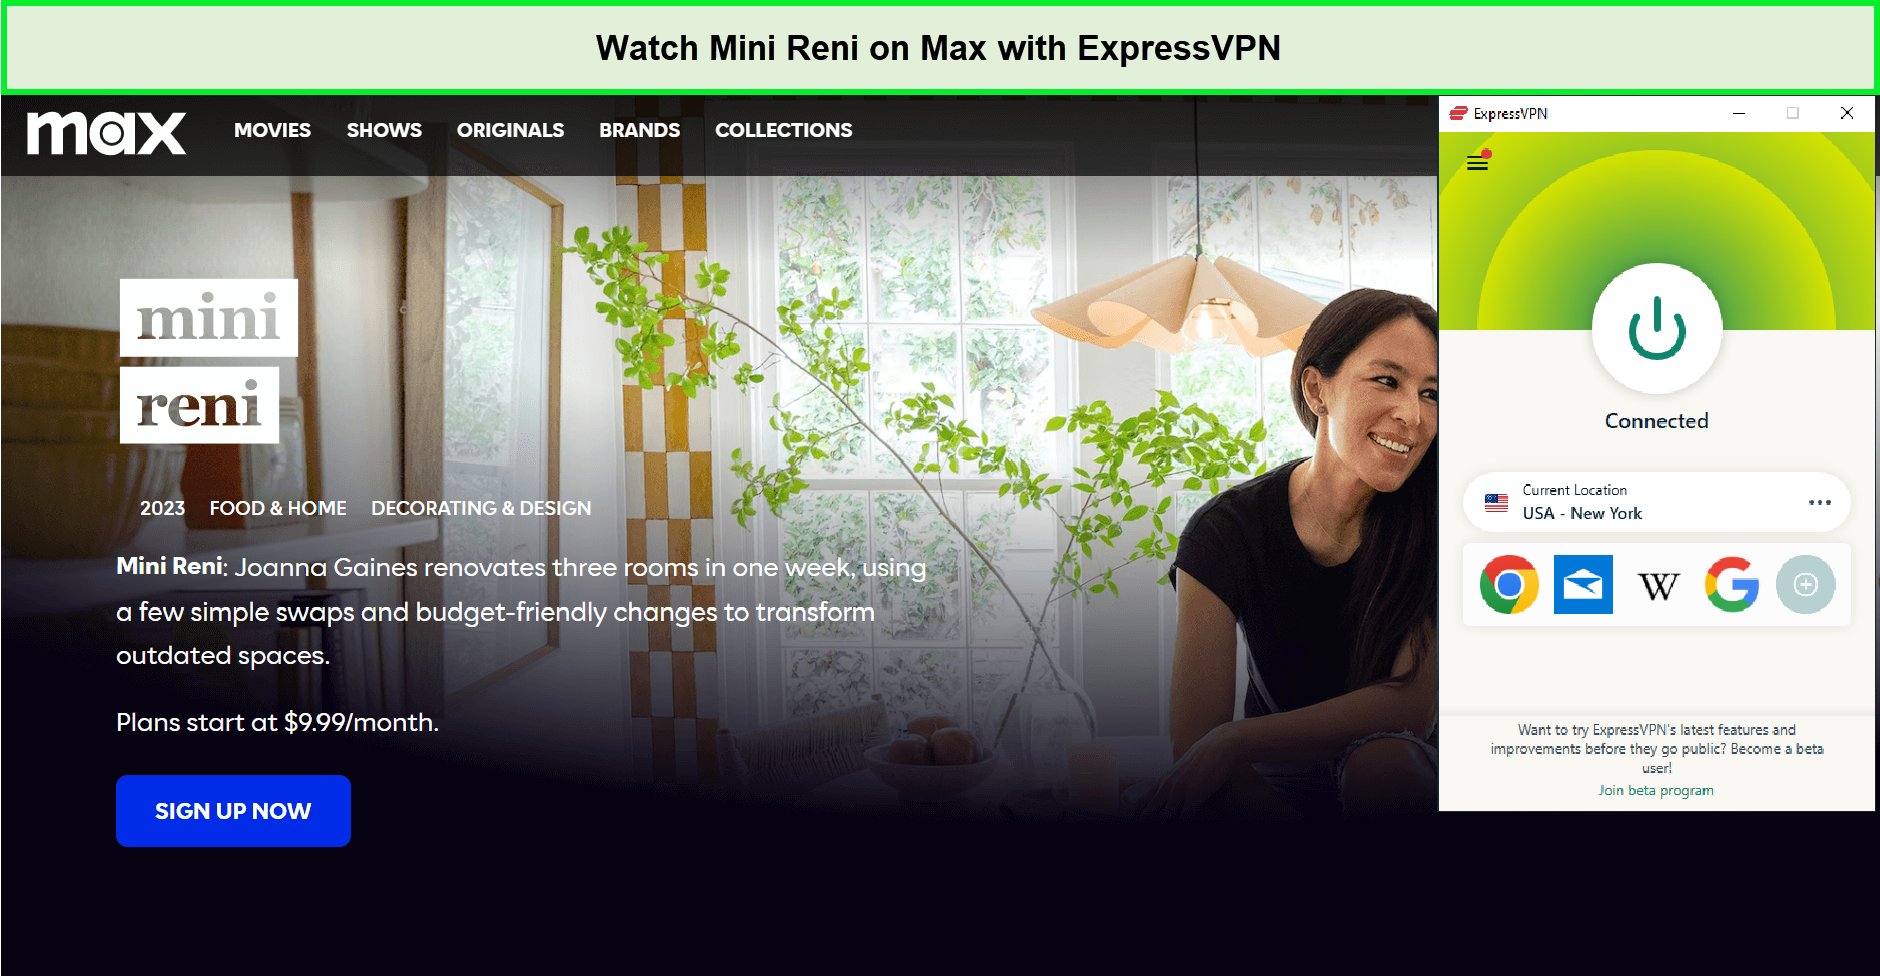 Watch-Mini-Reni-outside-USA-on-Max-with-ExpressVPN